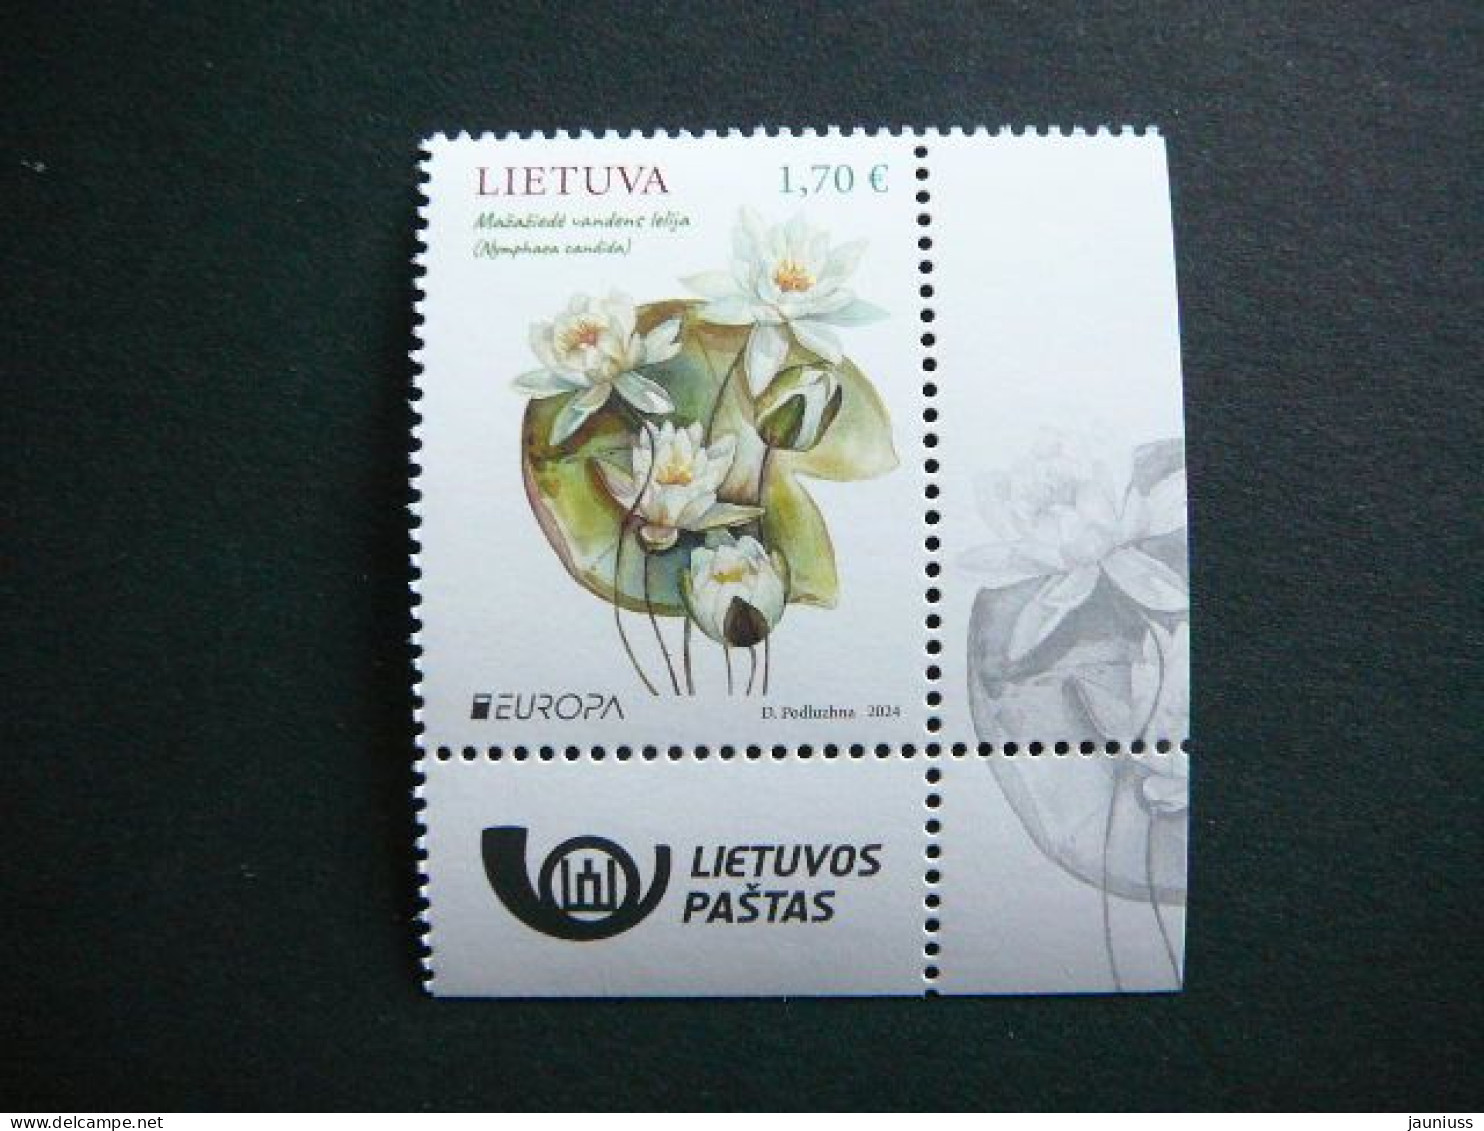 Europa CEPT. Water Lily # Lietuva Litauen Lituanie Litouwen Lithuania # 2024 MNH #4 - Lituanie